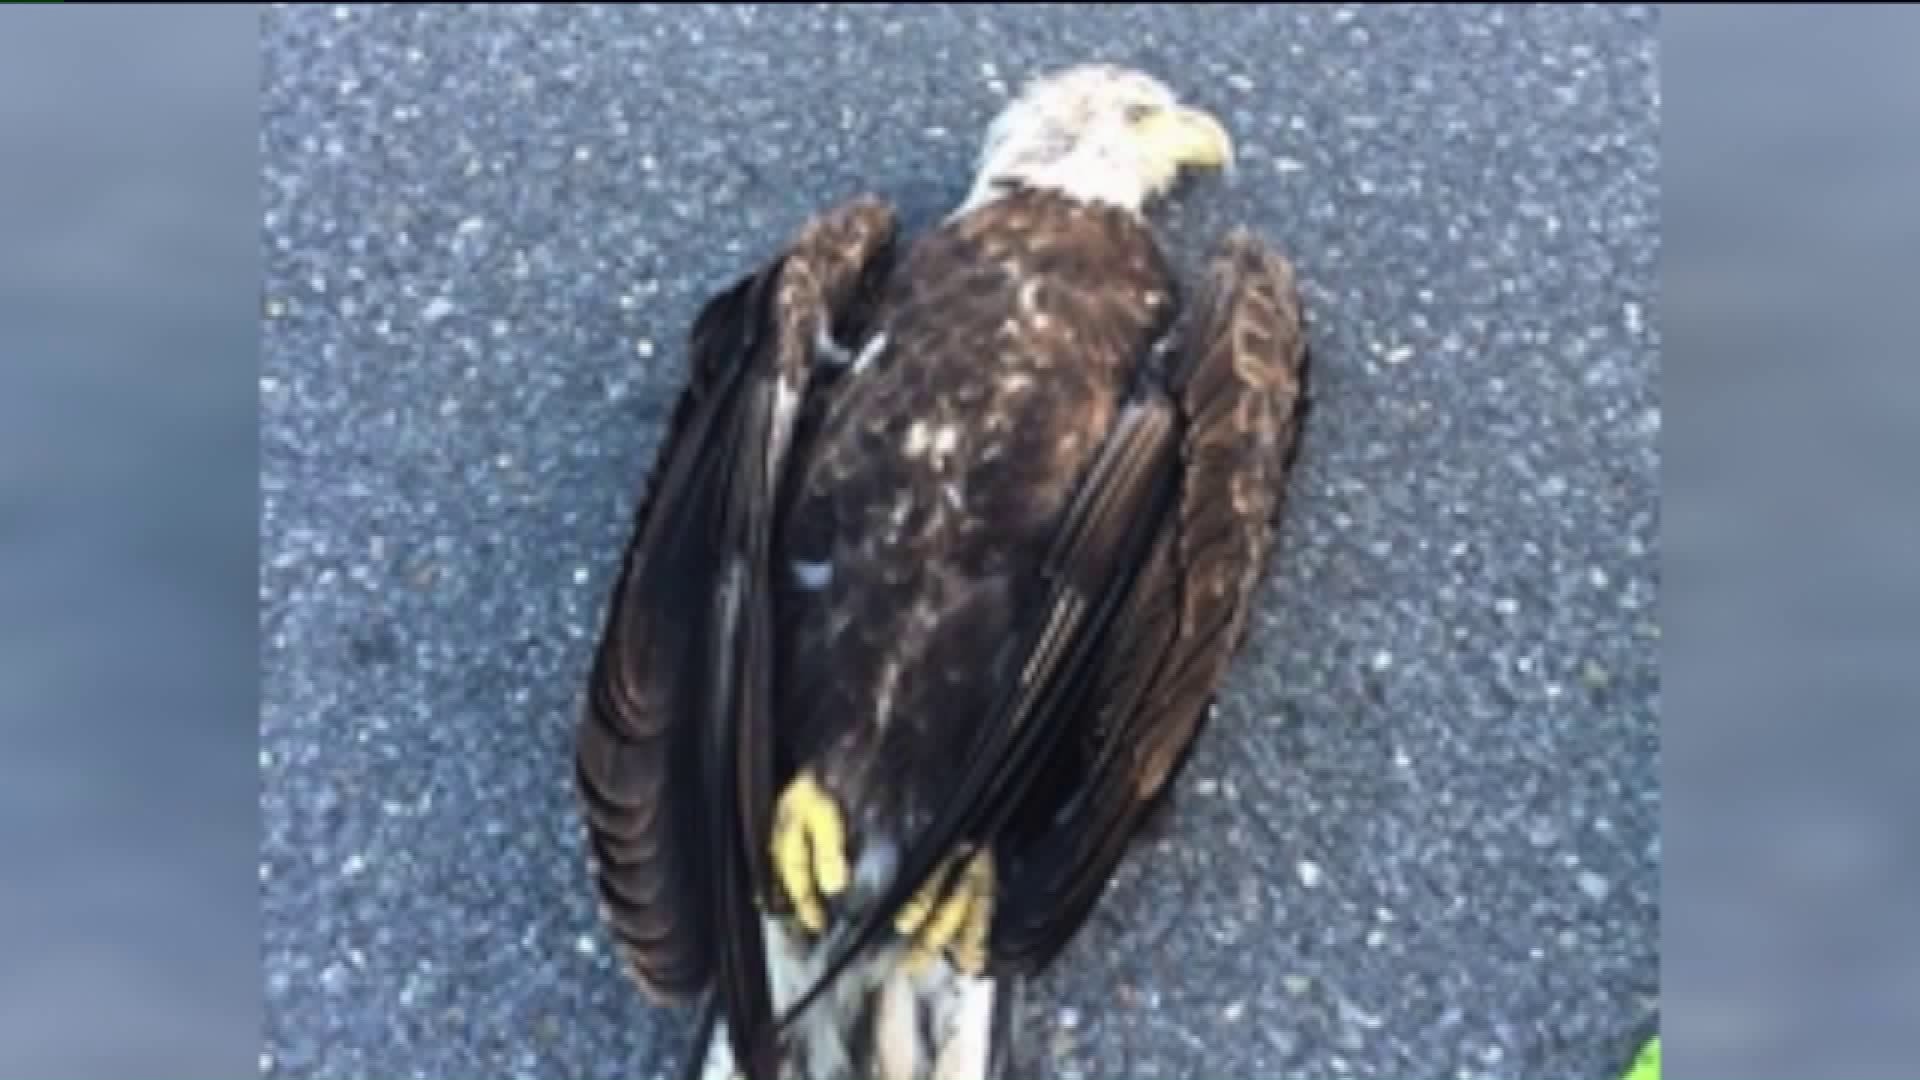 PennDOT Worker Tries to Help Injured Bald Eagle